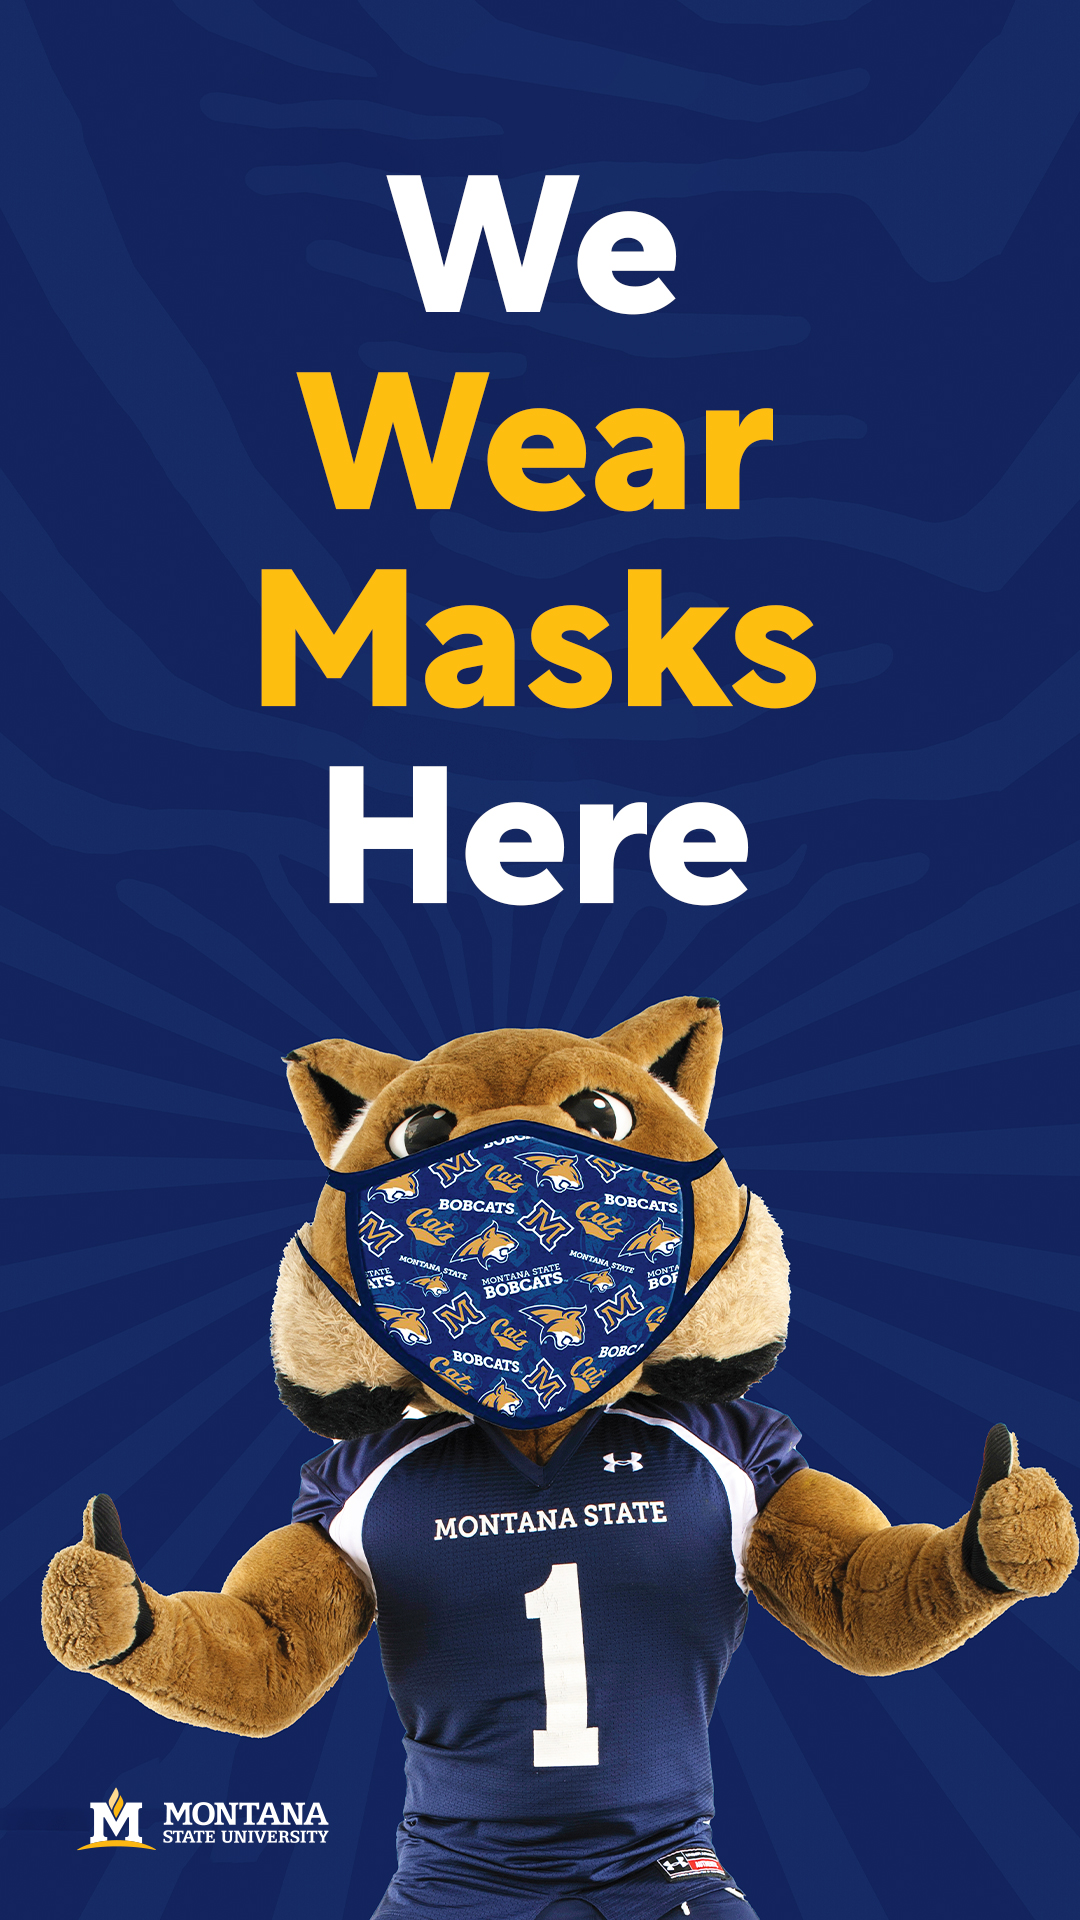 We wear masks here. Champ mascot in a mask.